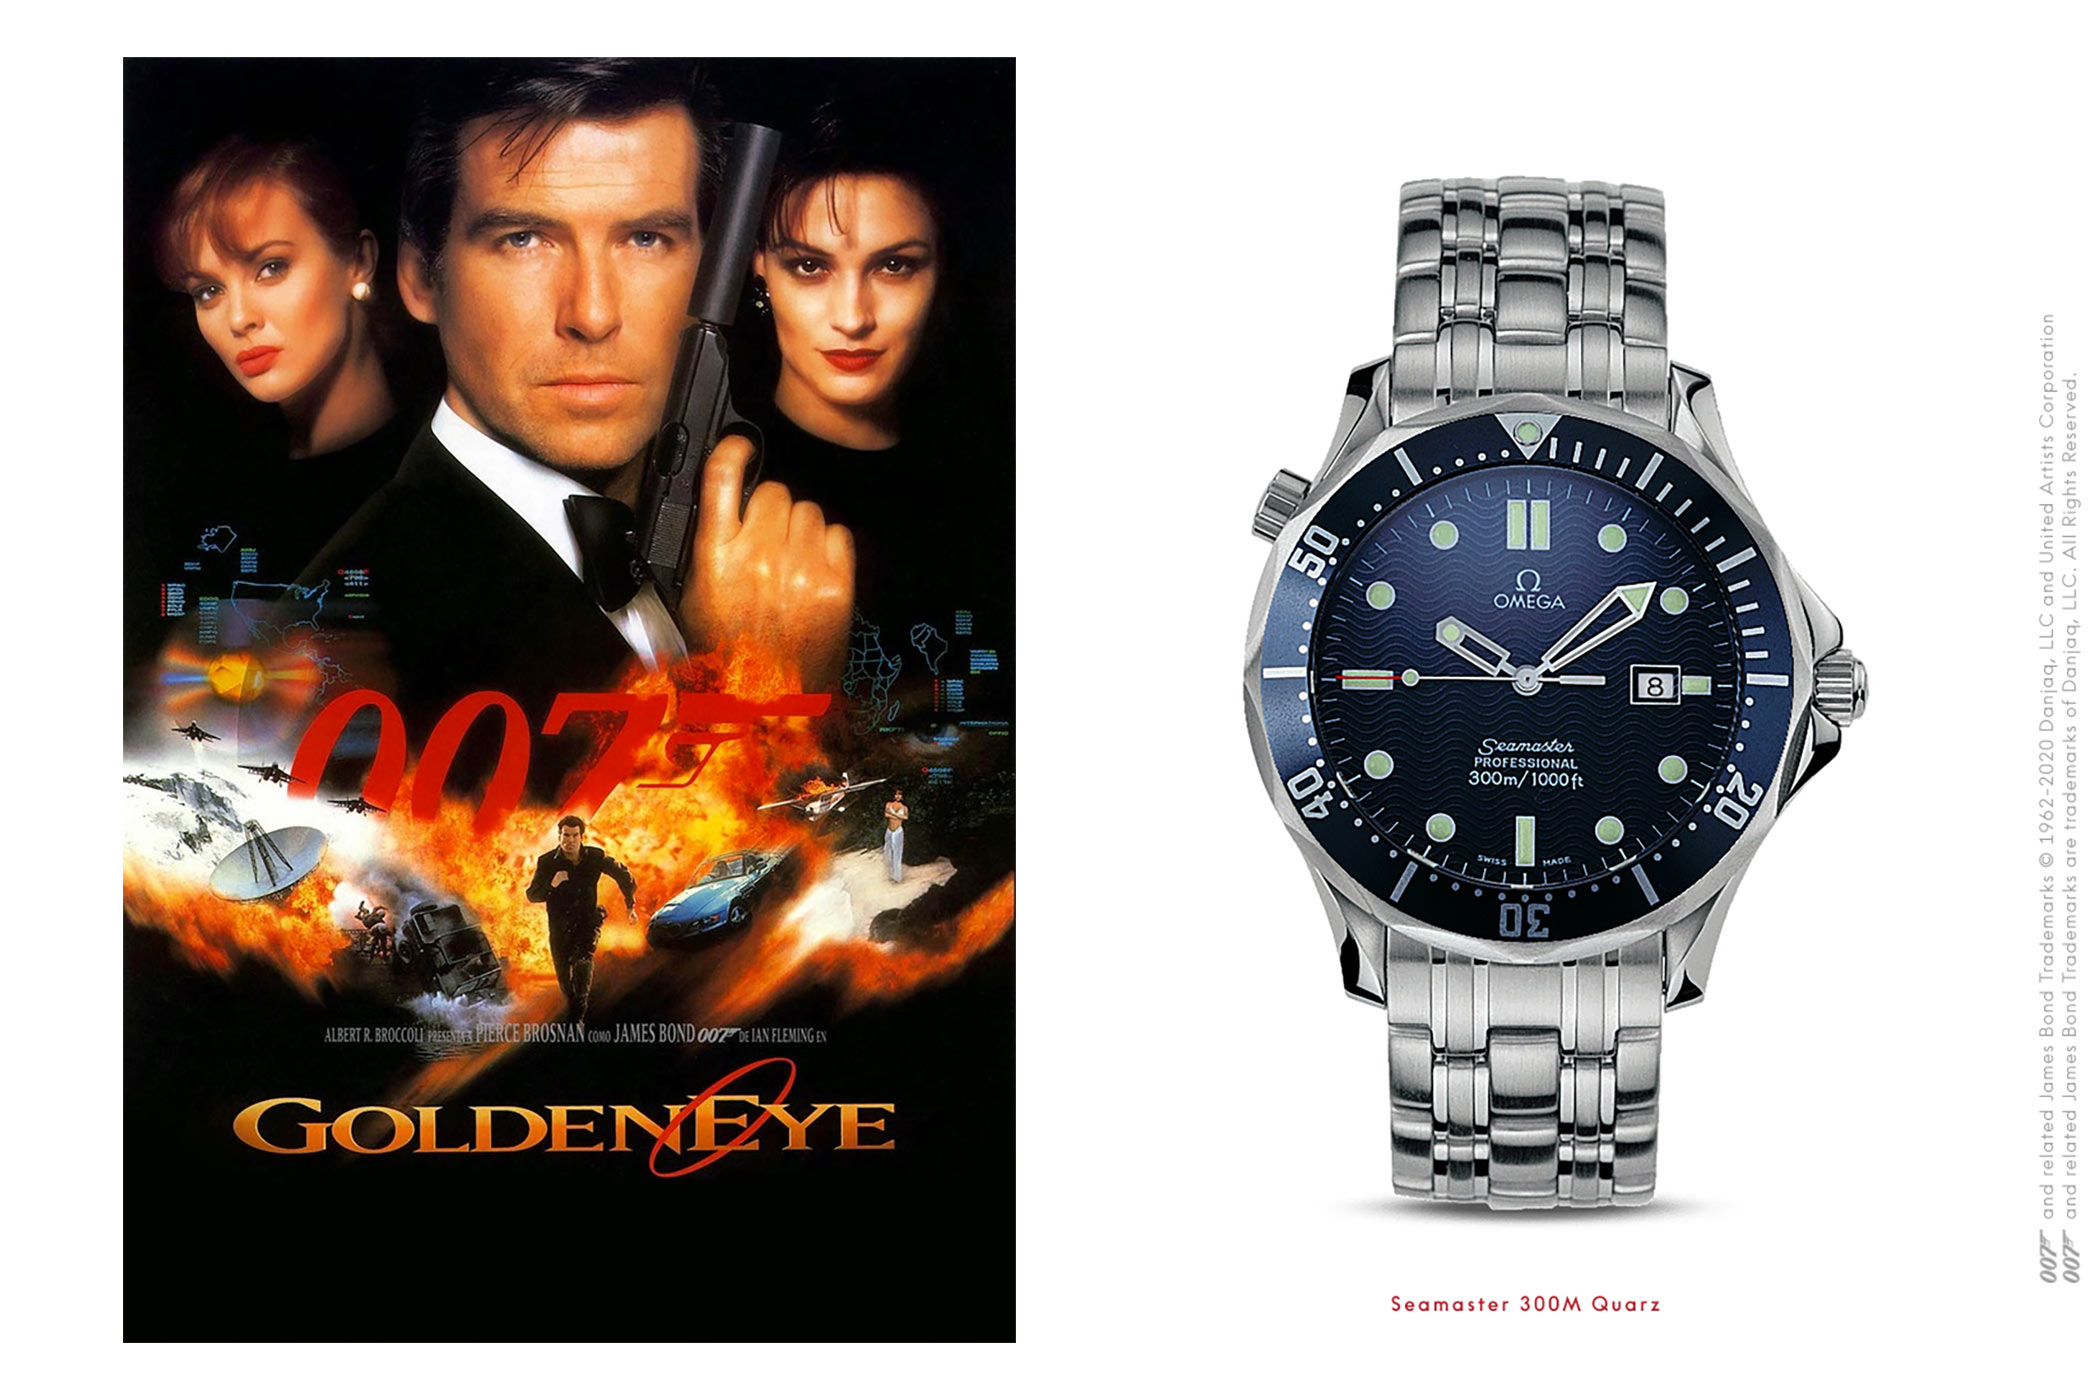 11 James Bond Gadgets From Pierce Brosnan's Movies Ranked